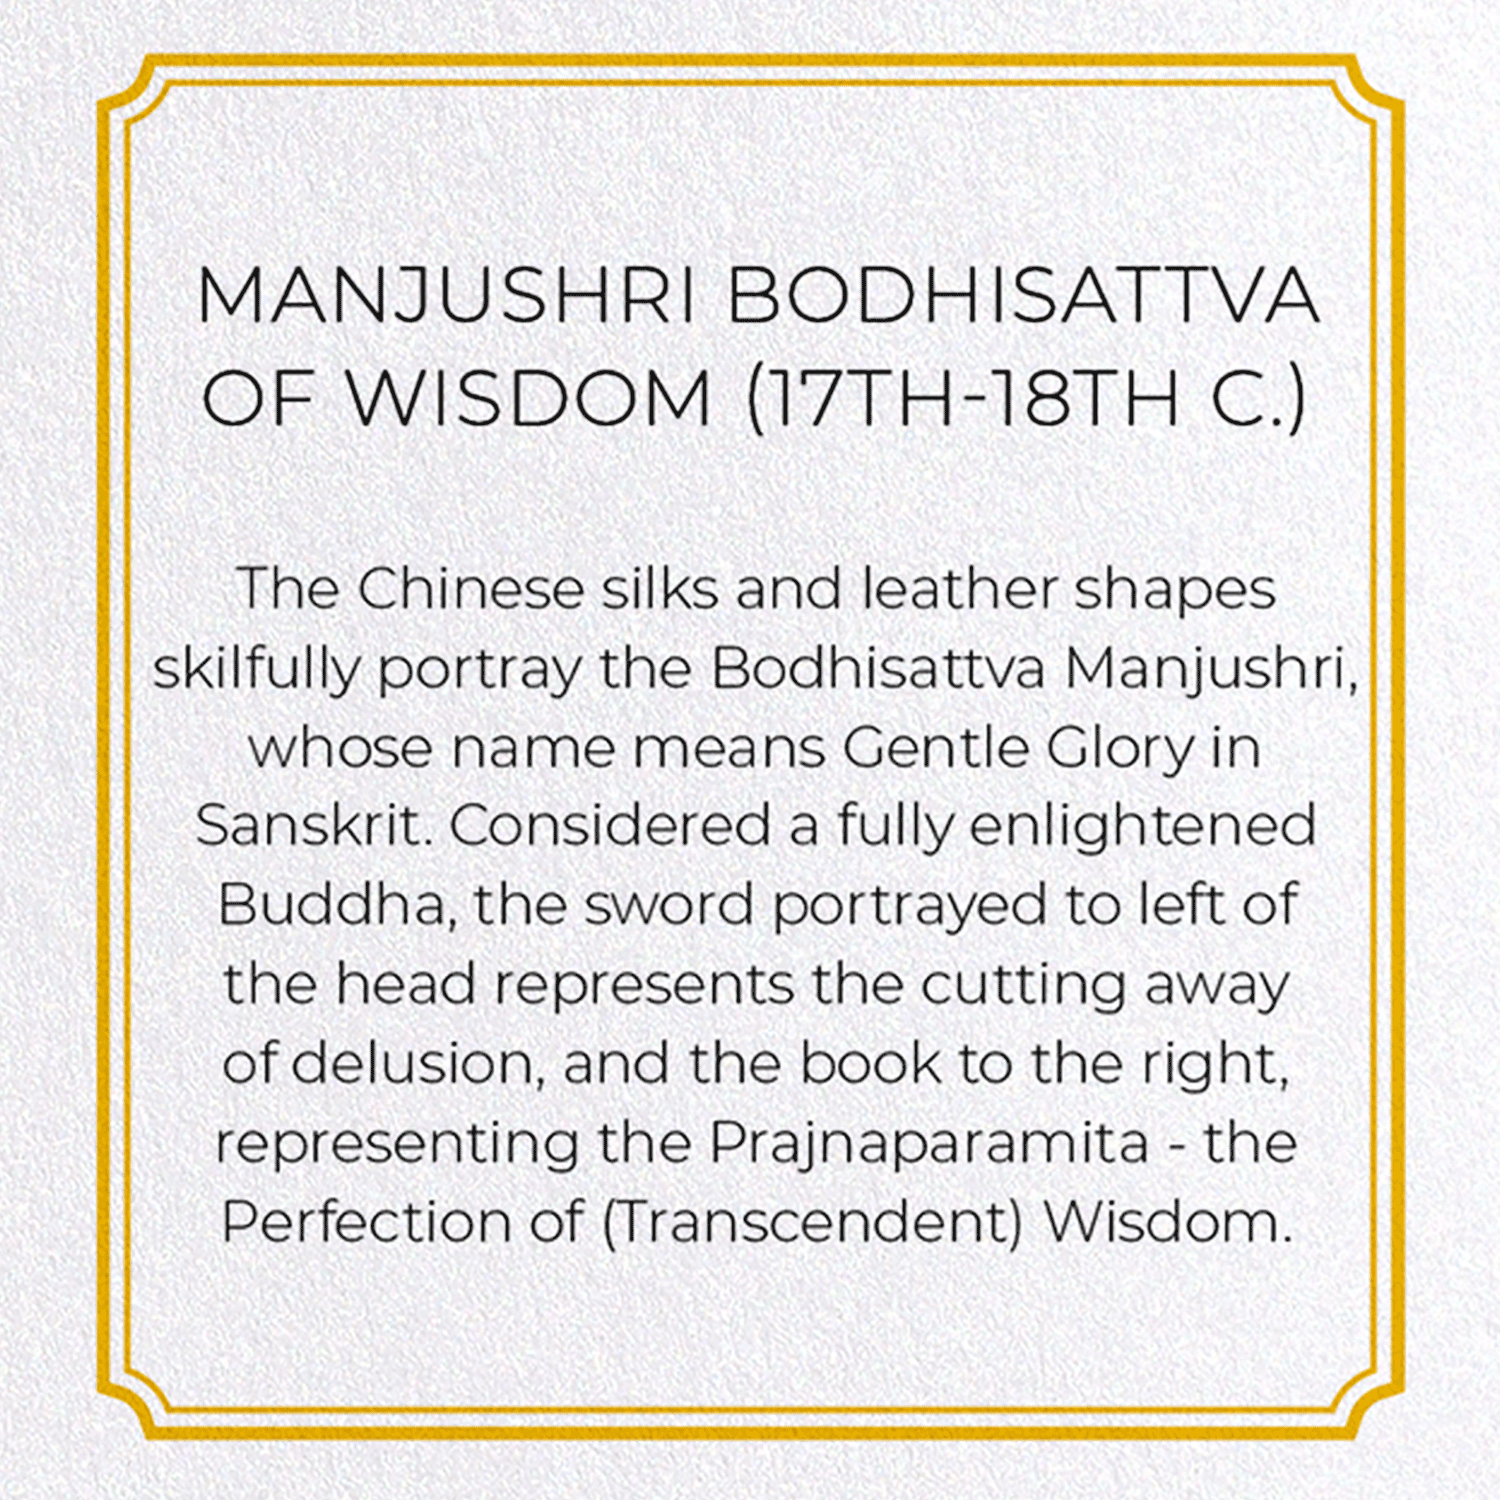 MANJUSHRI BODHISATTVA OF WISDOM (17TH-18TH C.)